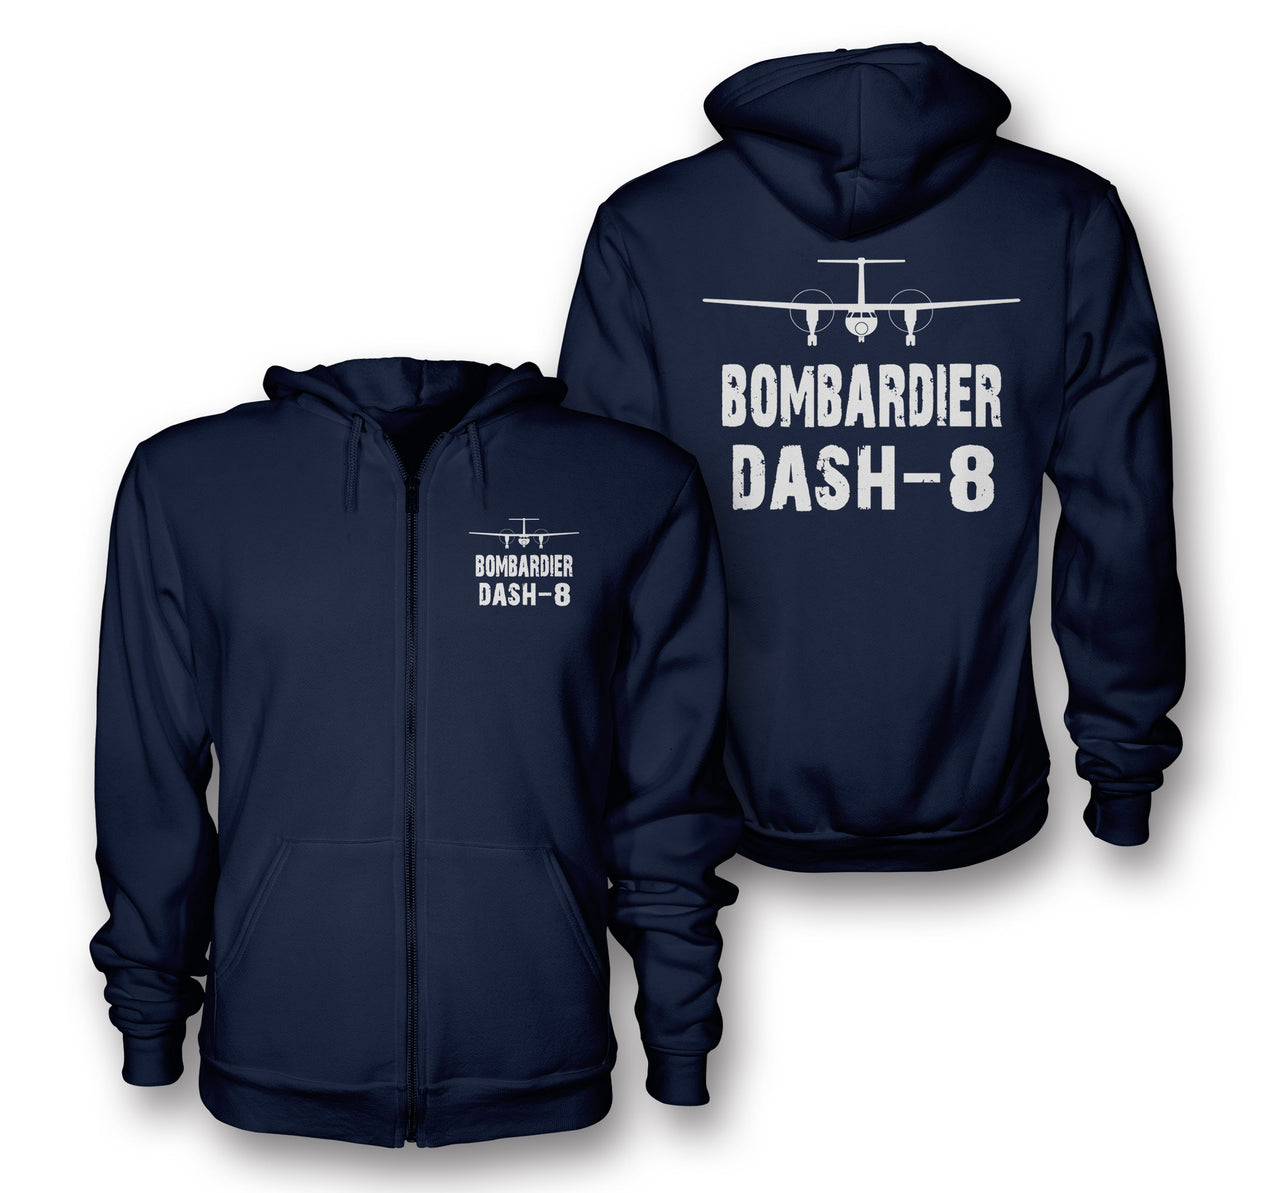 Bombardier Dash-8 & Plane Designed Zipped Hoodies